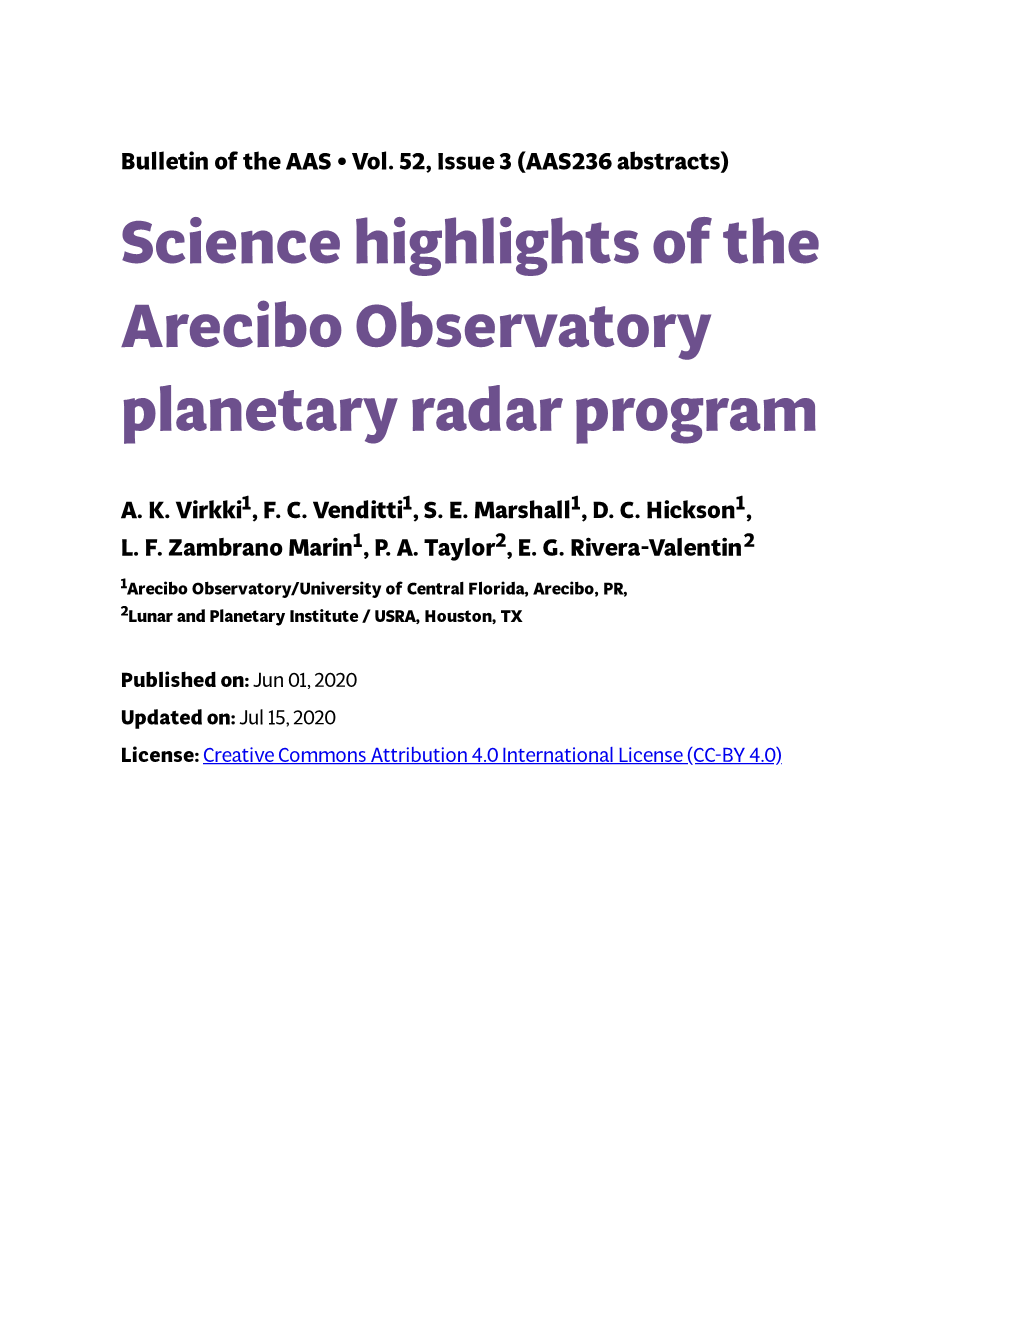 Science Highlights of the Arecibo Observatory Planetary Radar Program